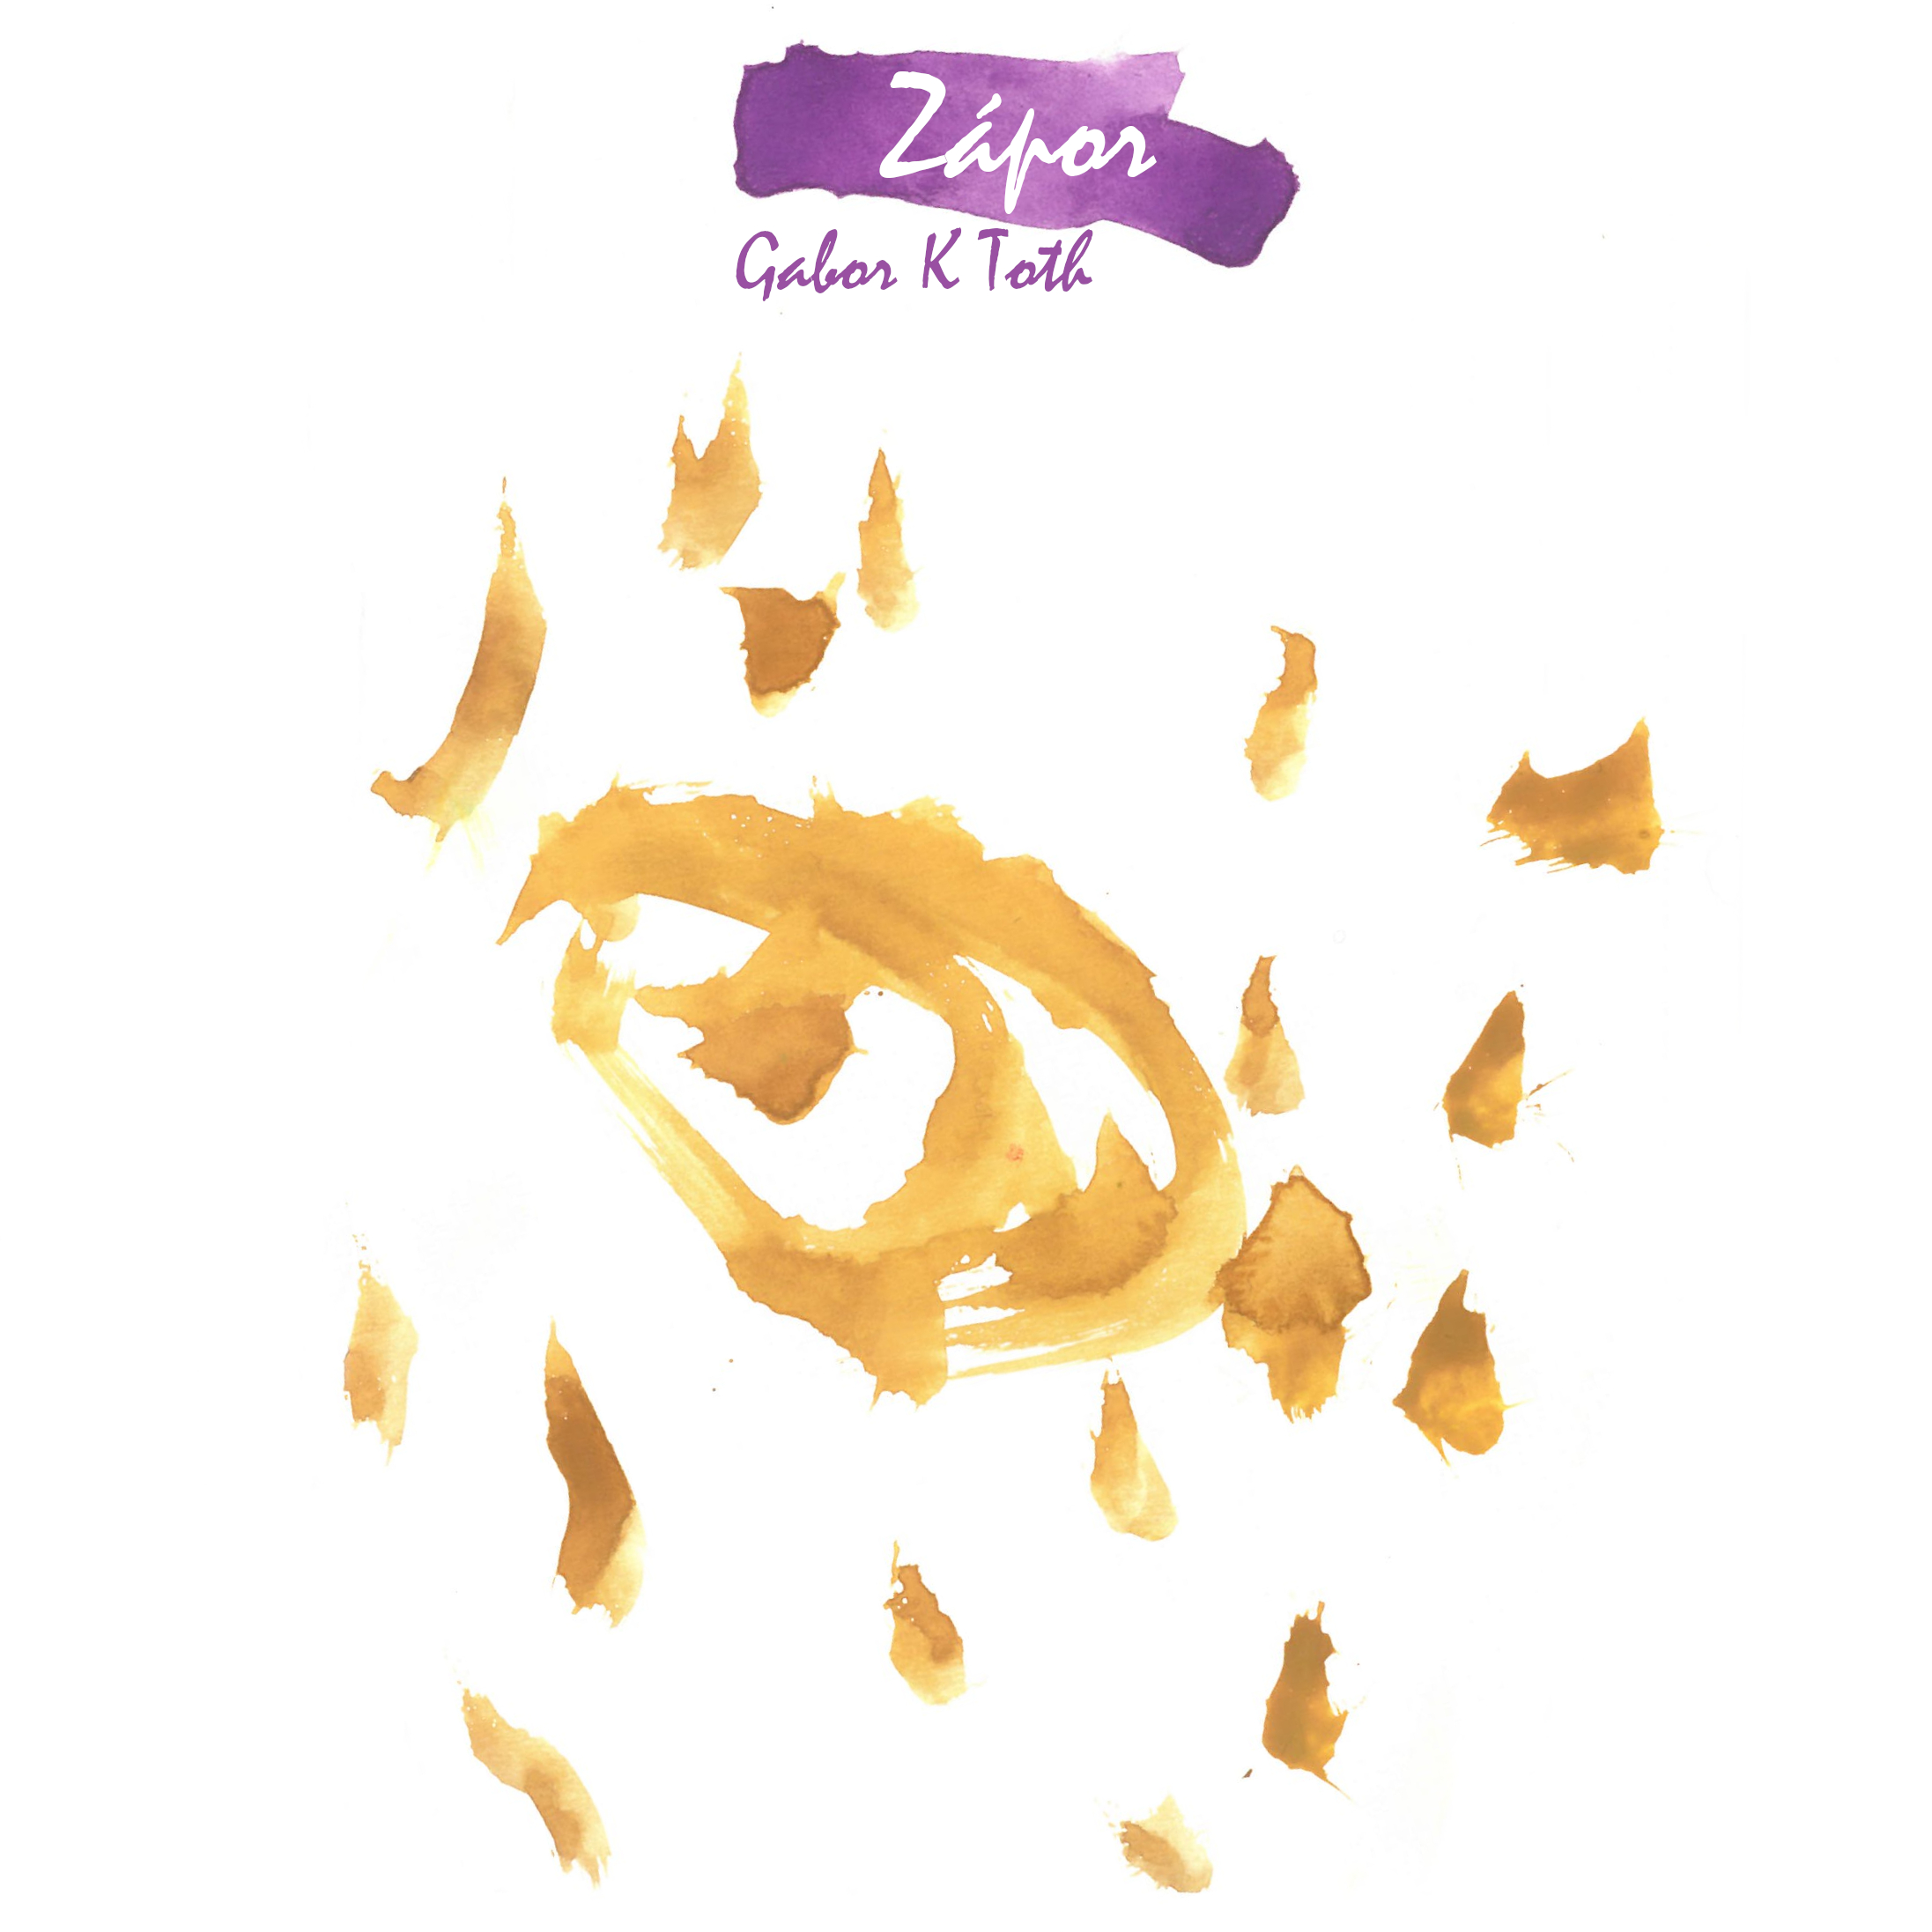 Zápor album front cover: Golden raindrops over white background, purple title.